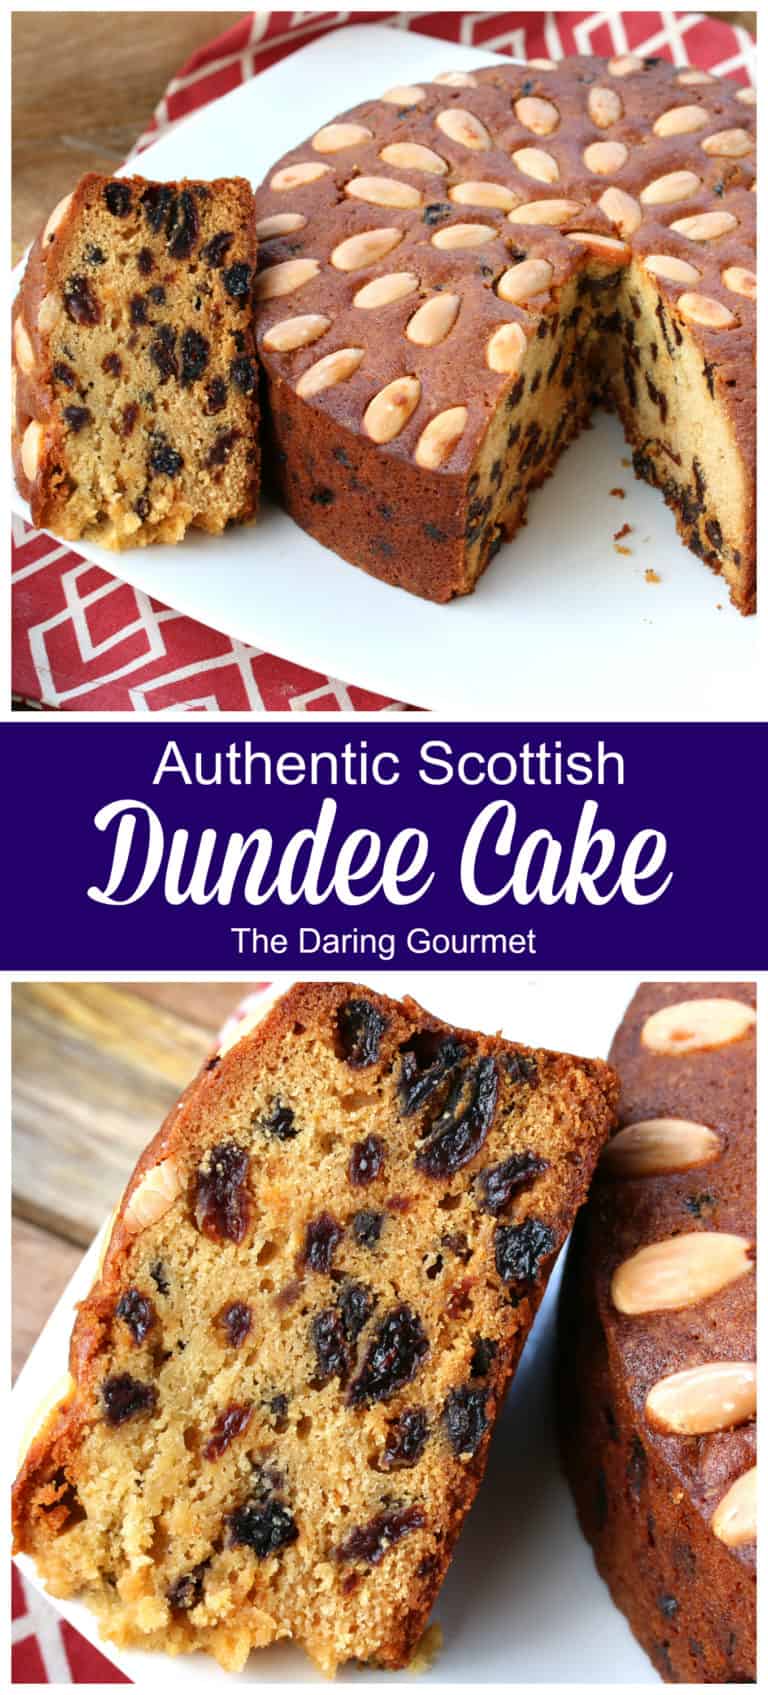 dundee cake recipe traditional authentic Scottish